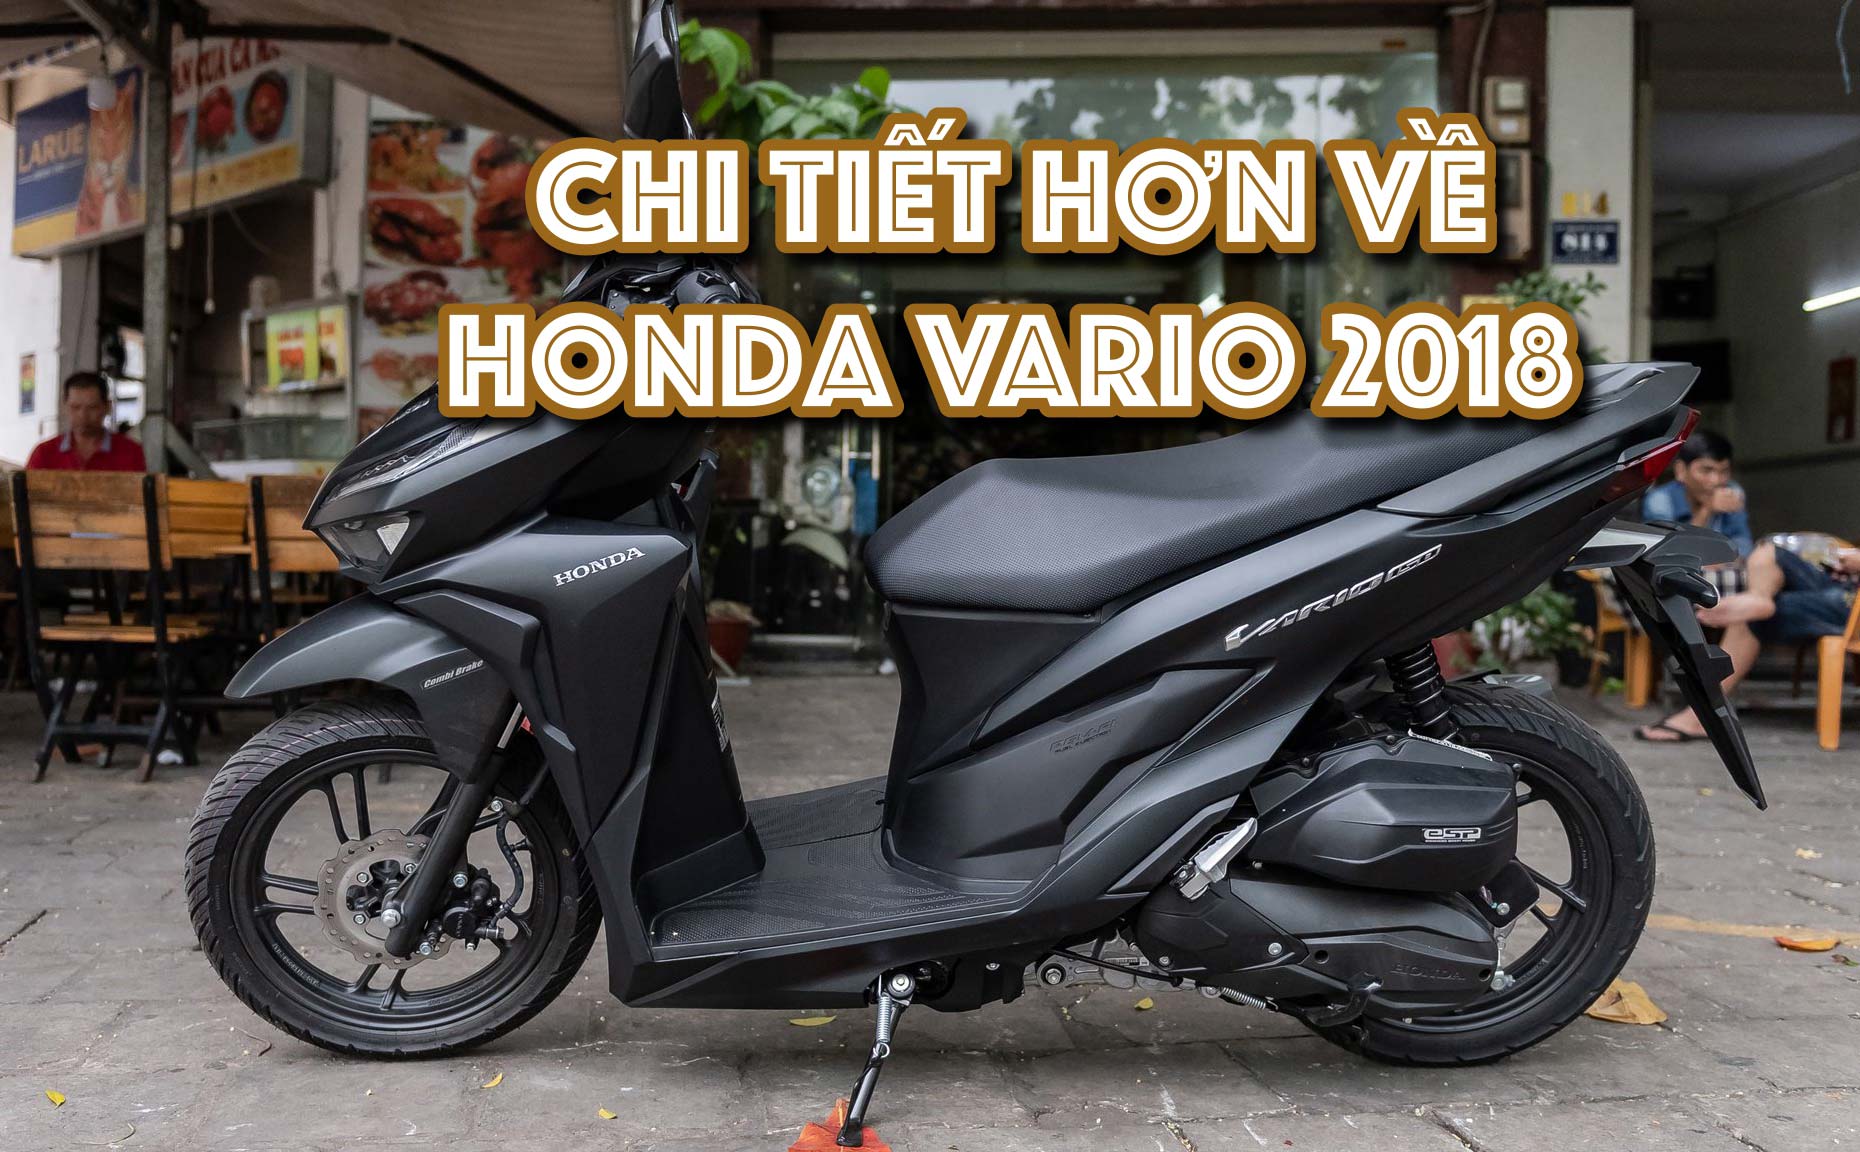 [Video] Chi tiết hơn về Honda Vario 2018